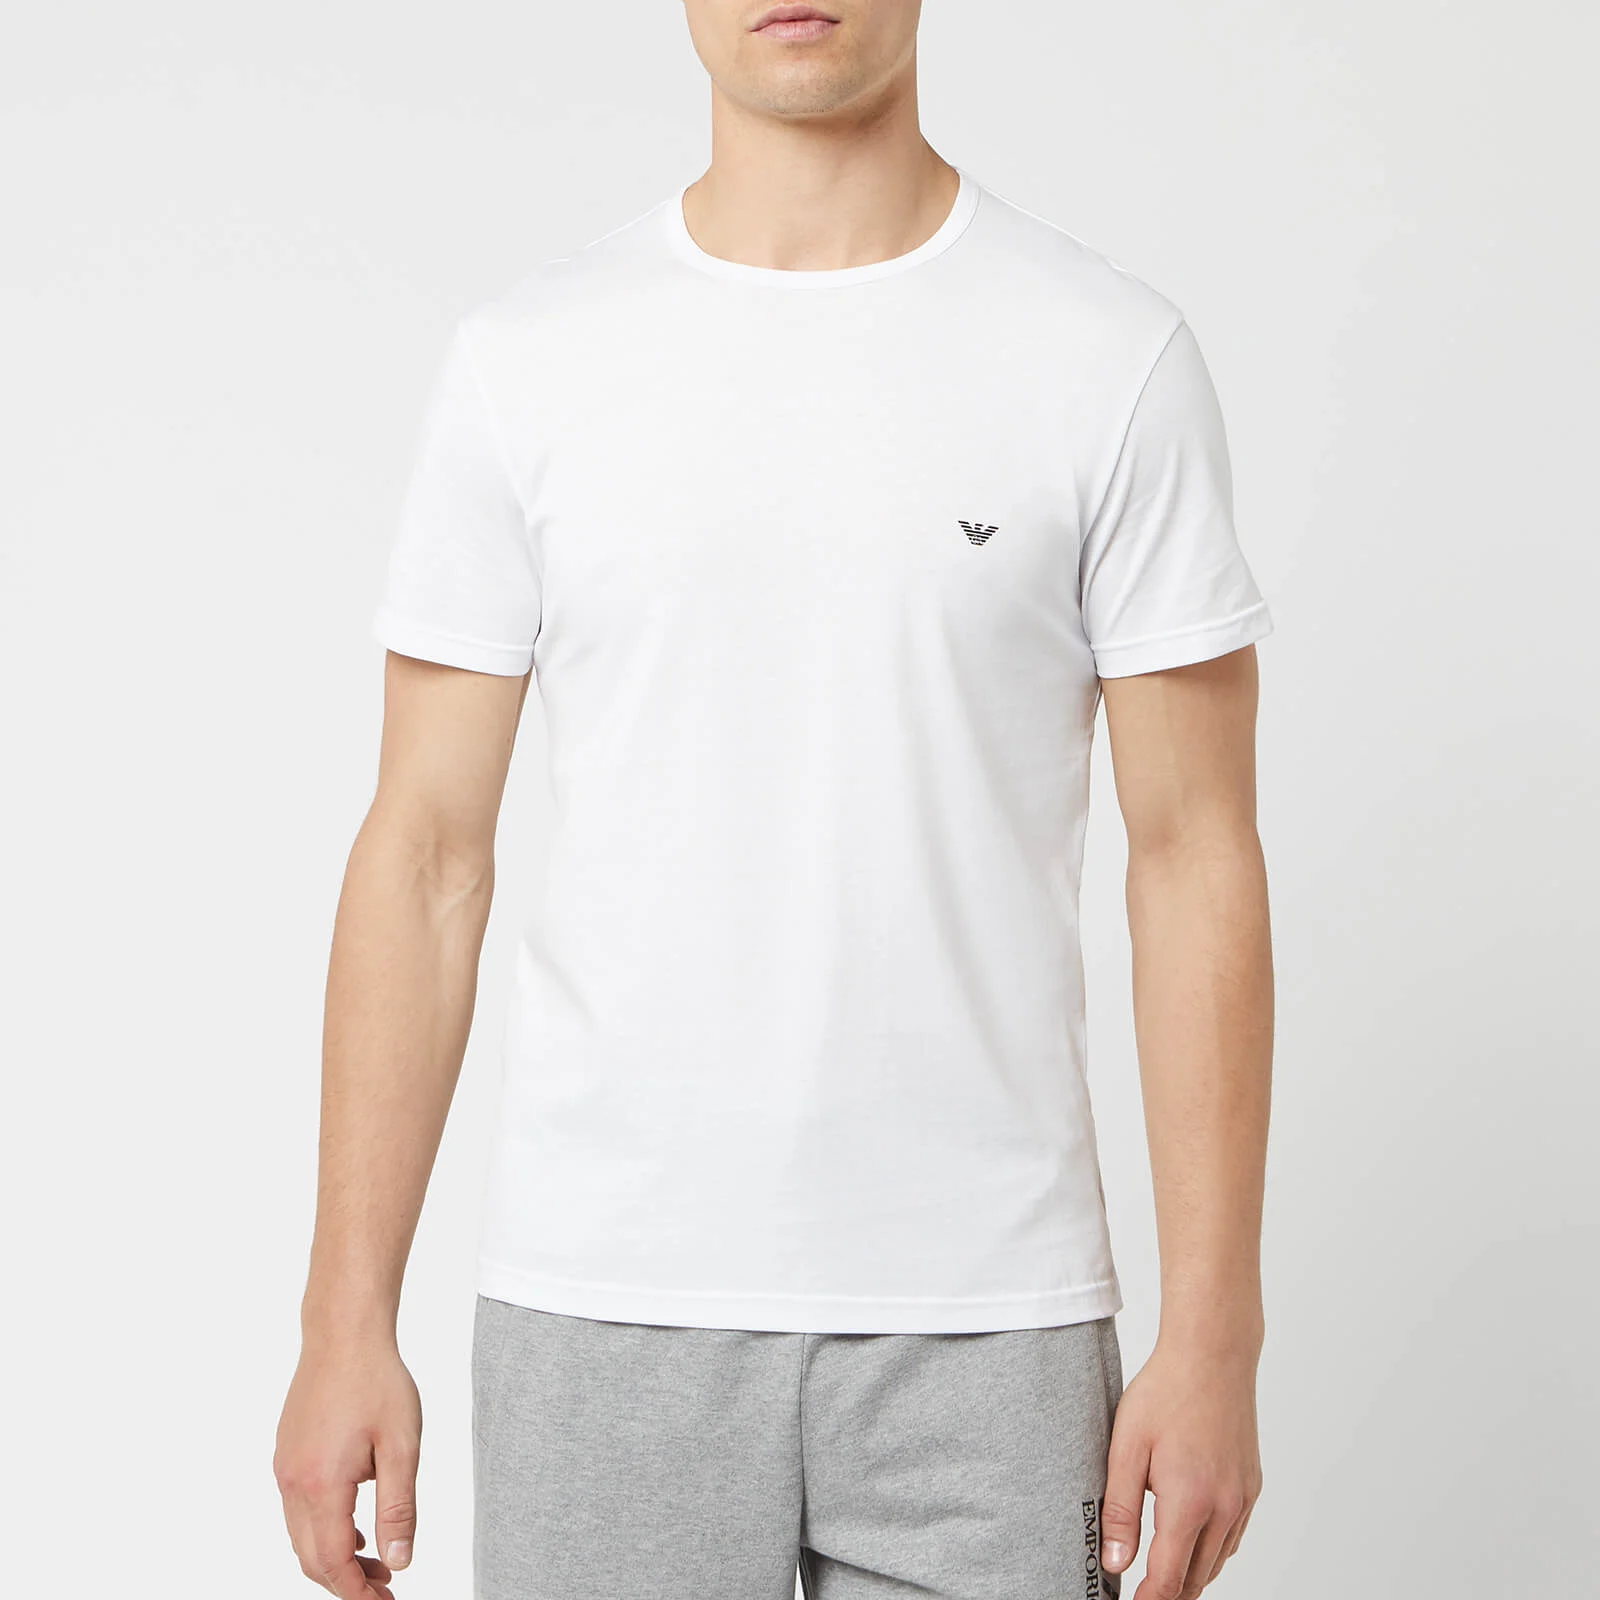 Emporio Armani Men's 2 Pack T-Shirt - Multi Image 1